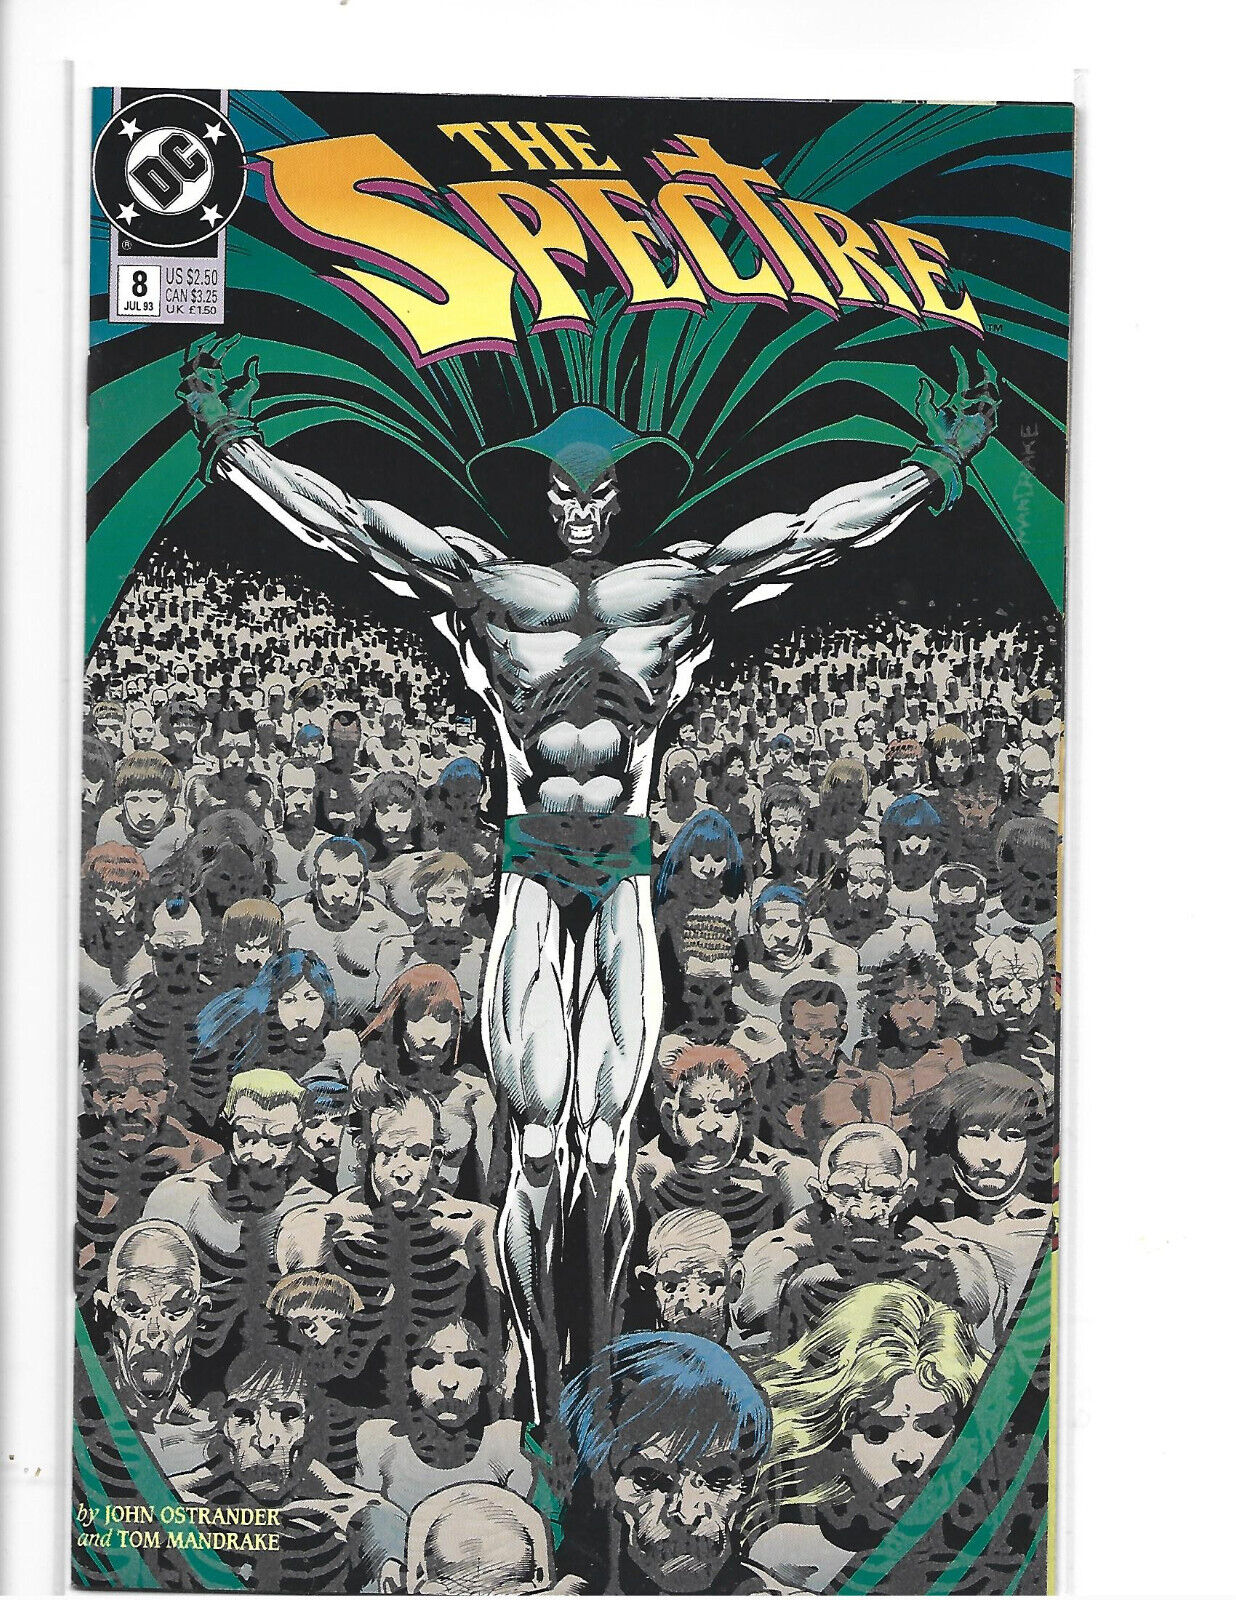 SPECTRE # 8 * GLOW-IN-THE-DARK COVER * DC COMICS * 1993 * NEAR MINT